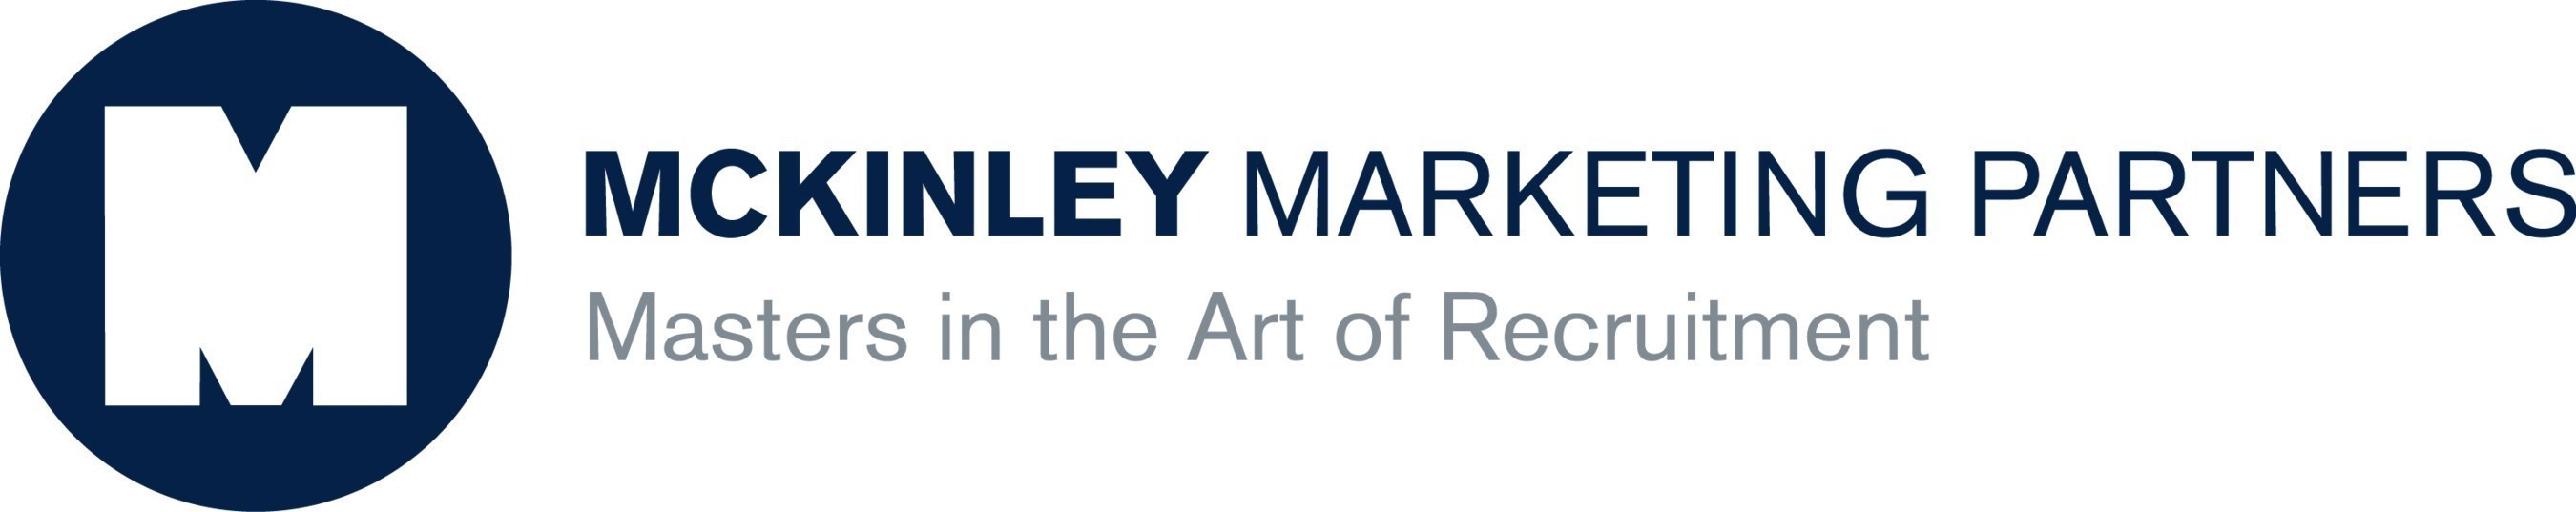 McKinley Marketing Partners, Inc.